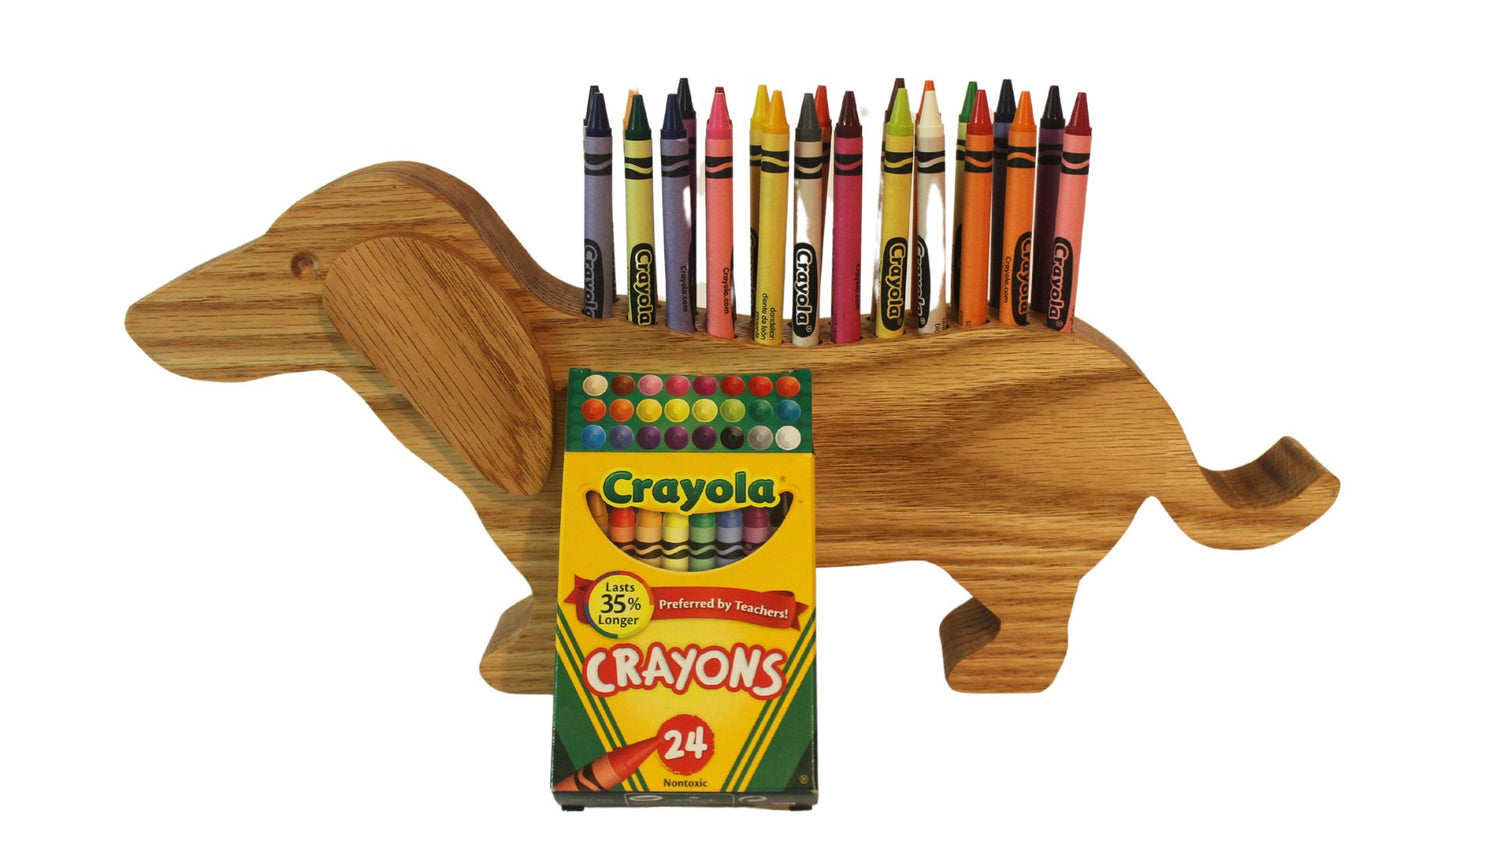 Crayon holders